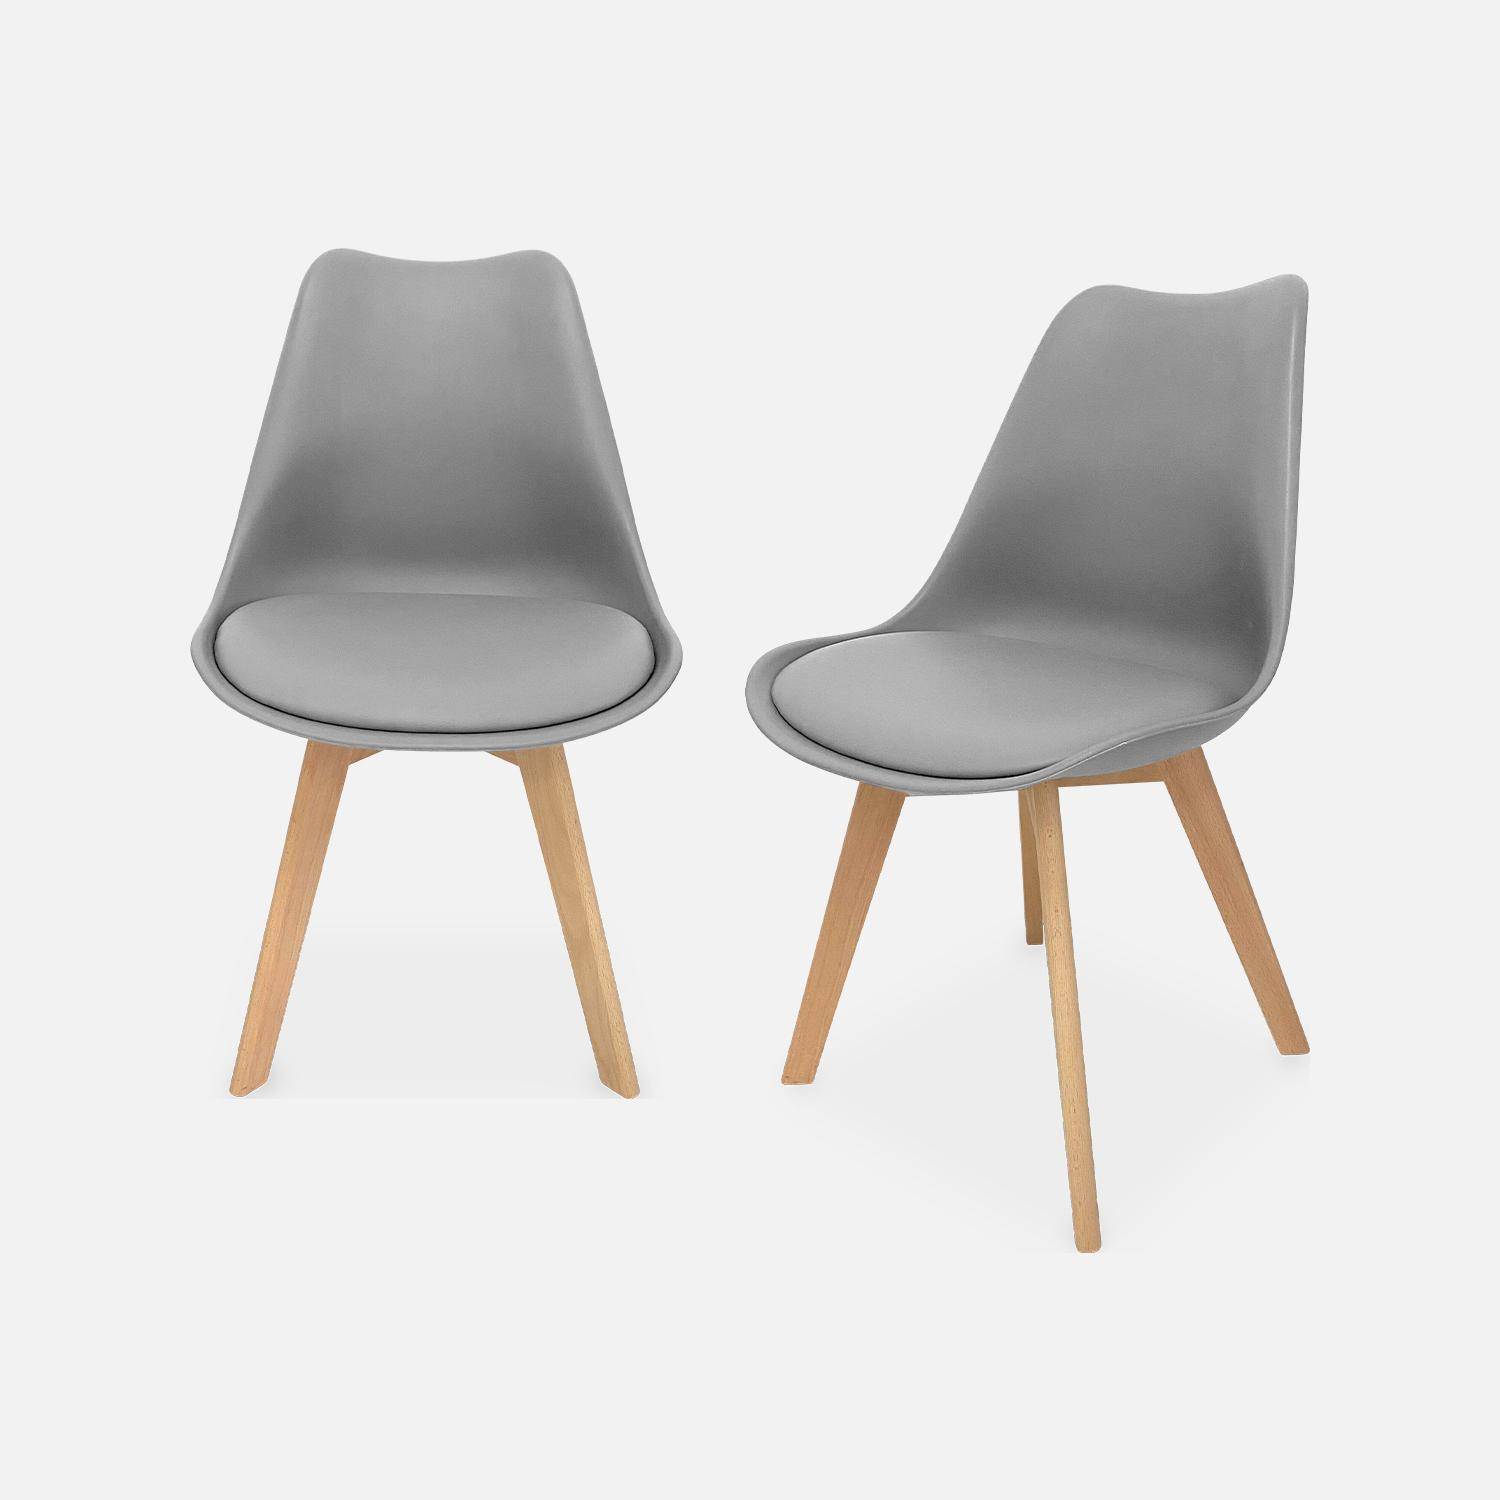 Pair of scandi-style dining chairs, grey, L49xD55xH81cm, NILS,sweeek,Photo1